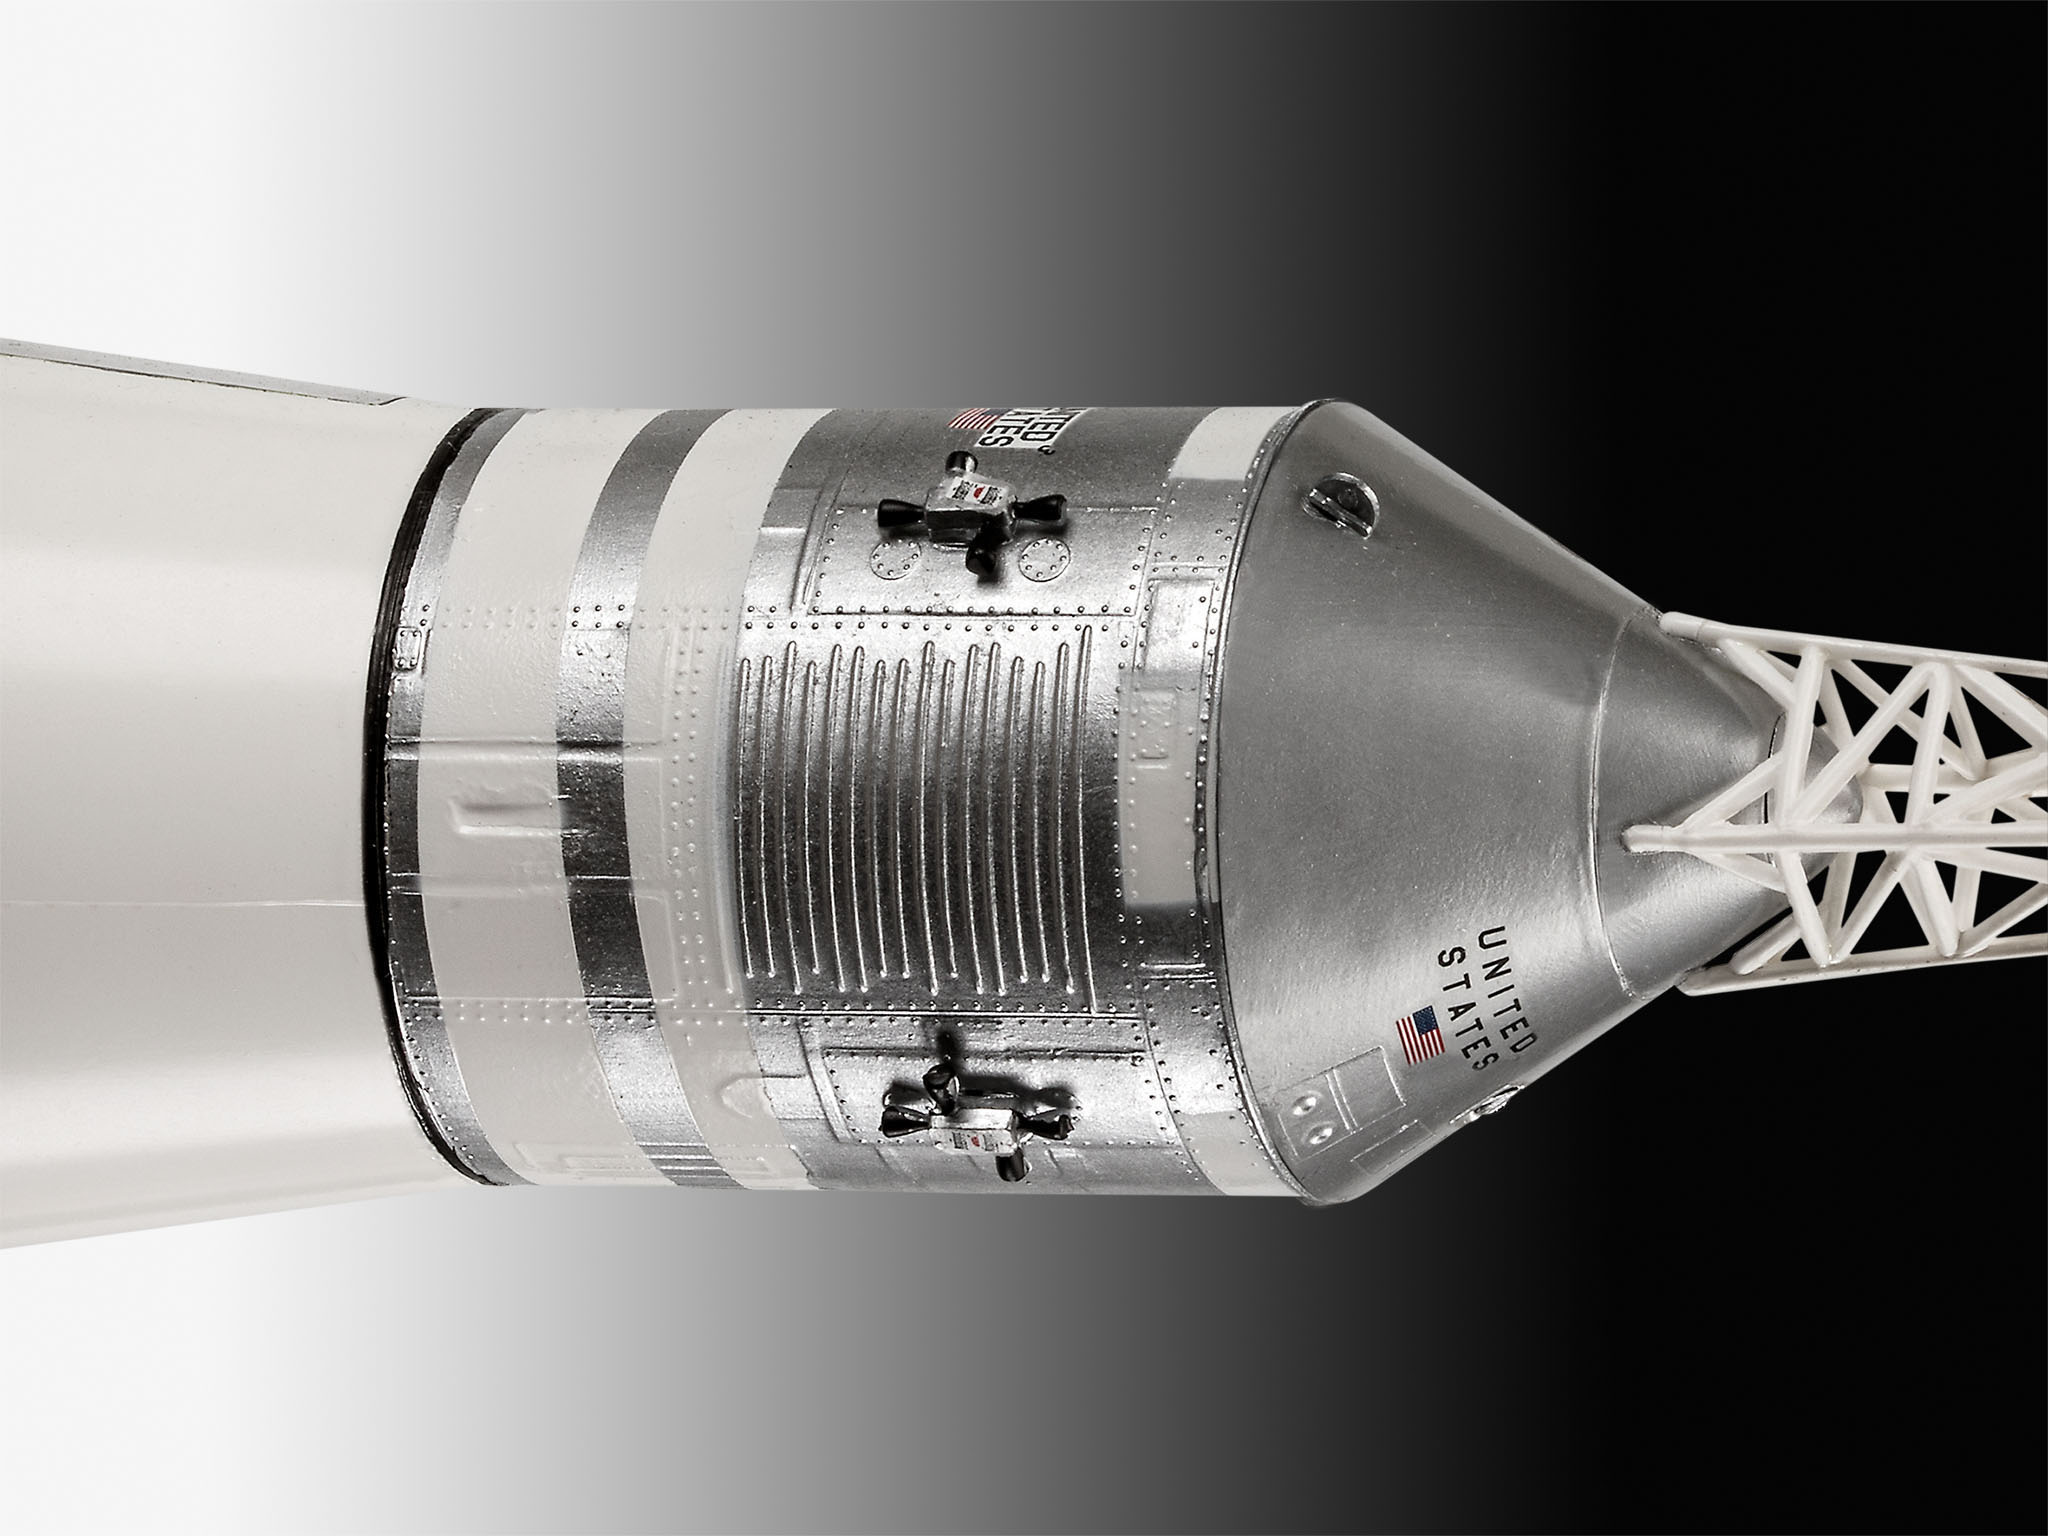 Rakete Saturn V Mehrfarbig 11 REVELL Apollo Bausatz,